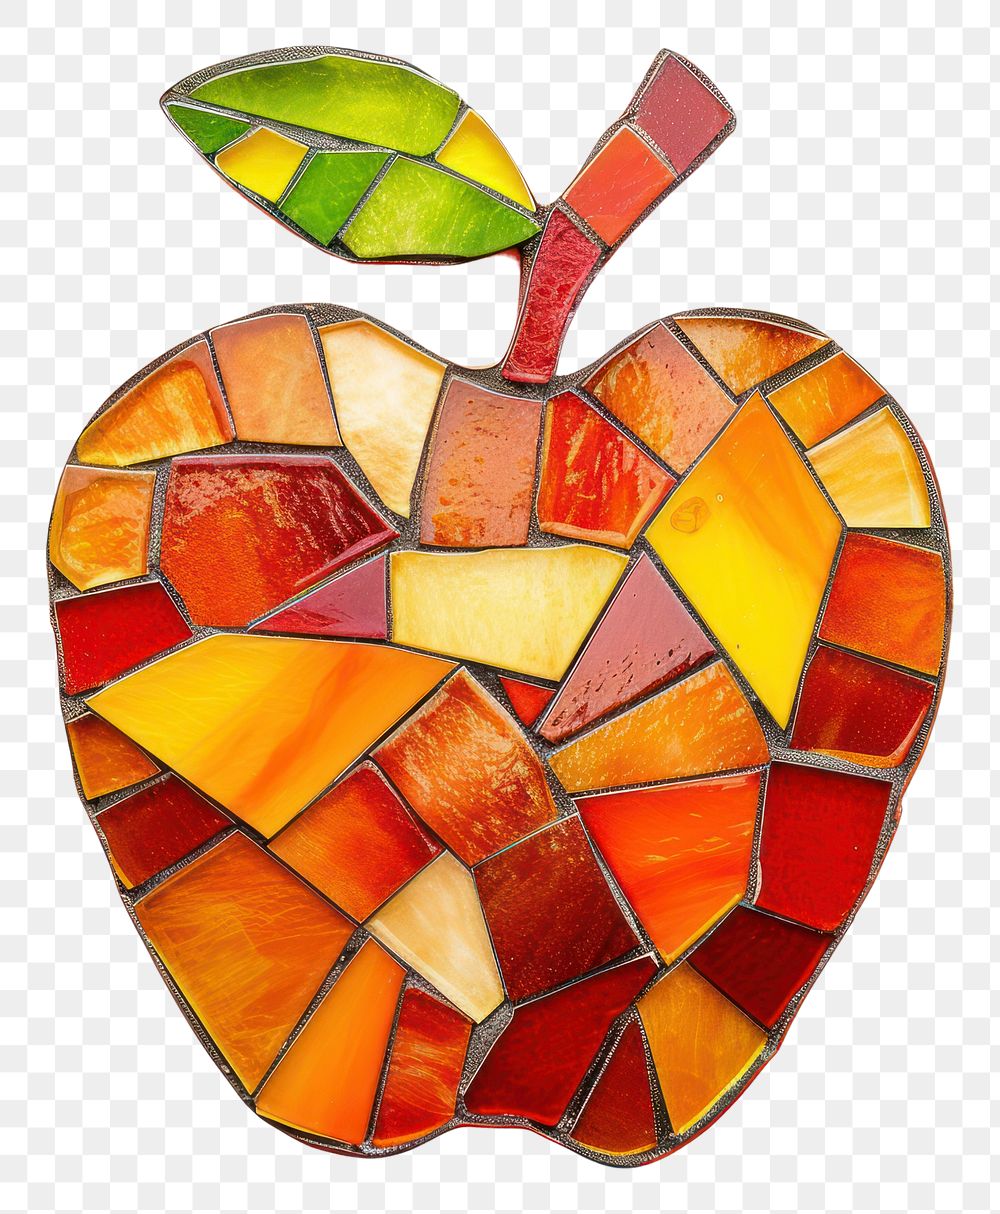 Mosaic tiles of apple fruit food art.